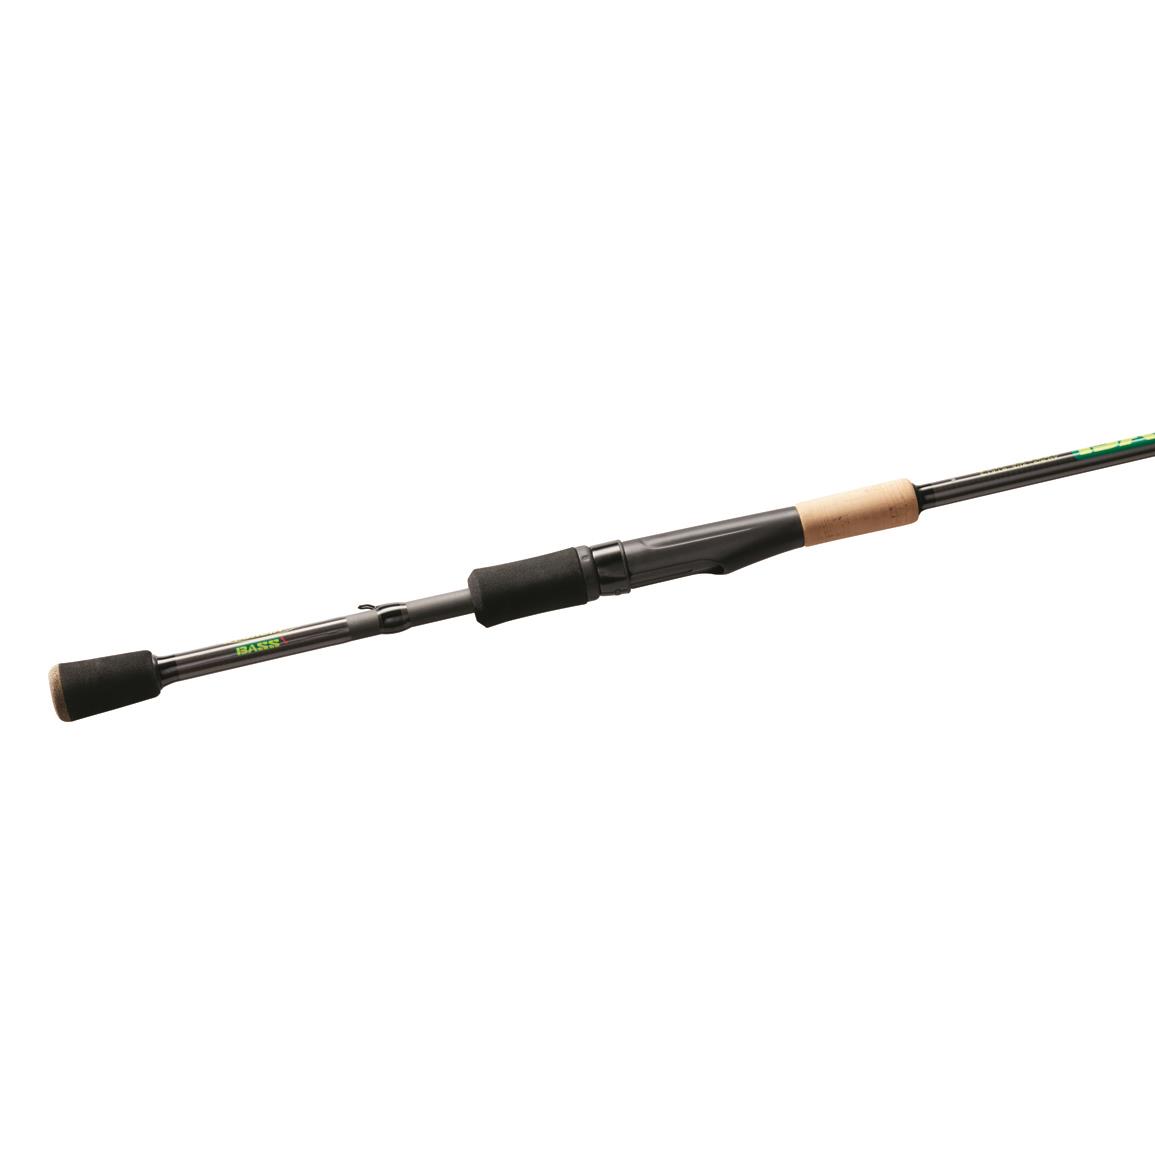 St. Croix Bass X Spinning Rod, 7'1 Length, Medium Power, Fast Action